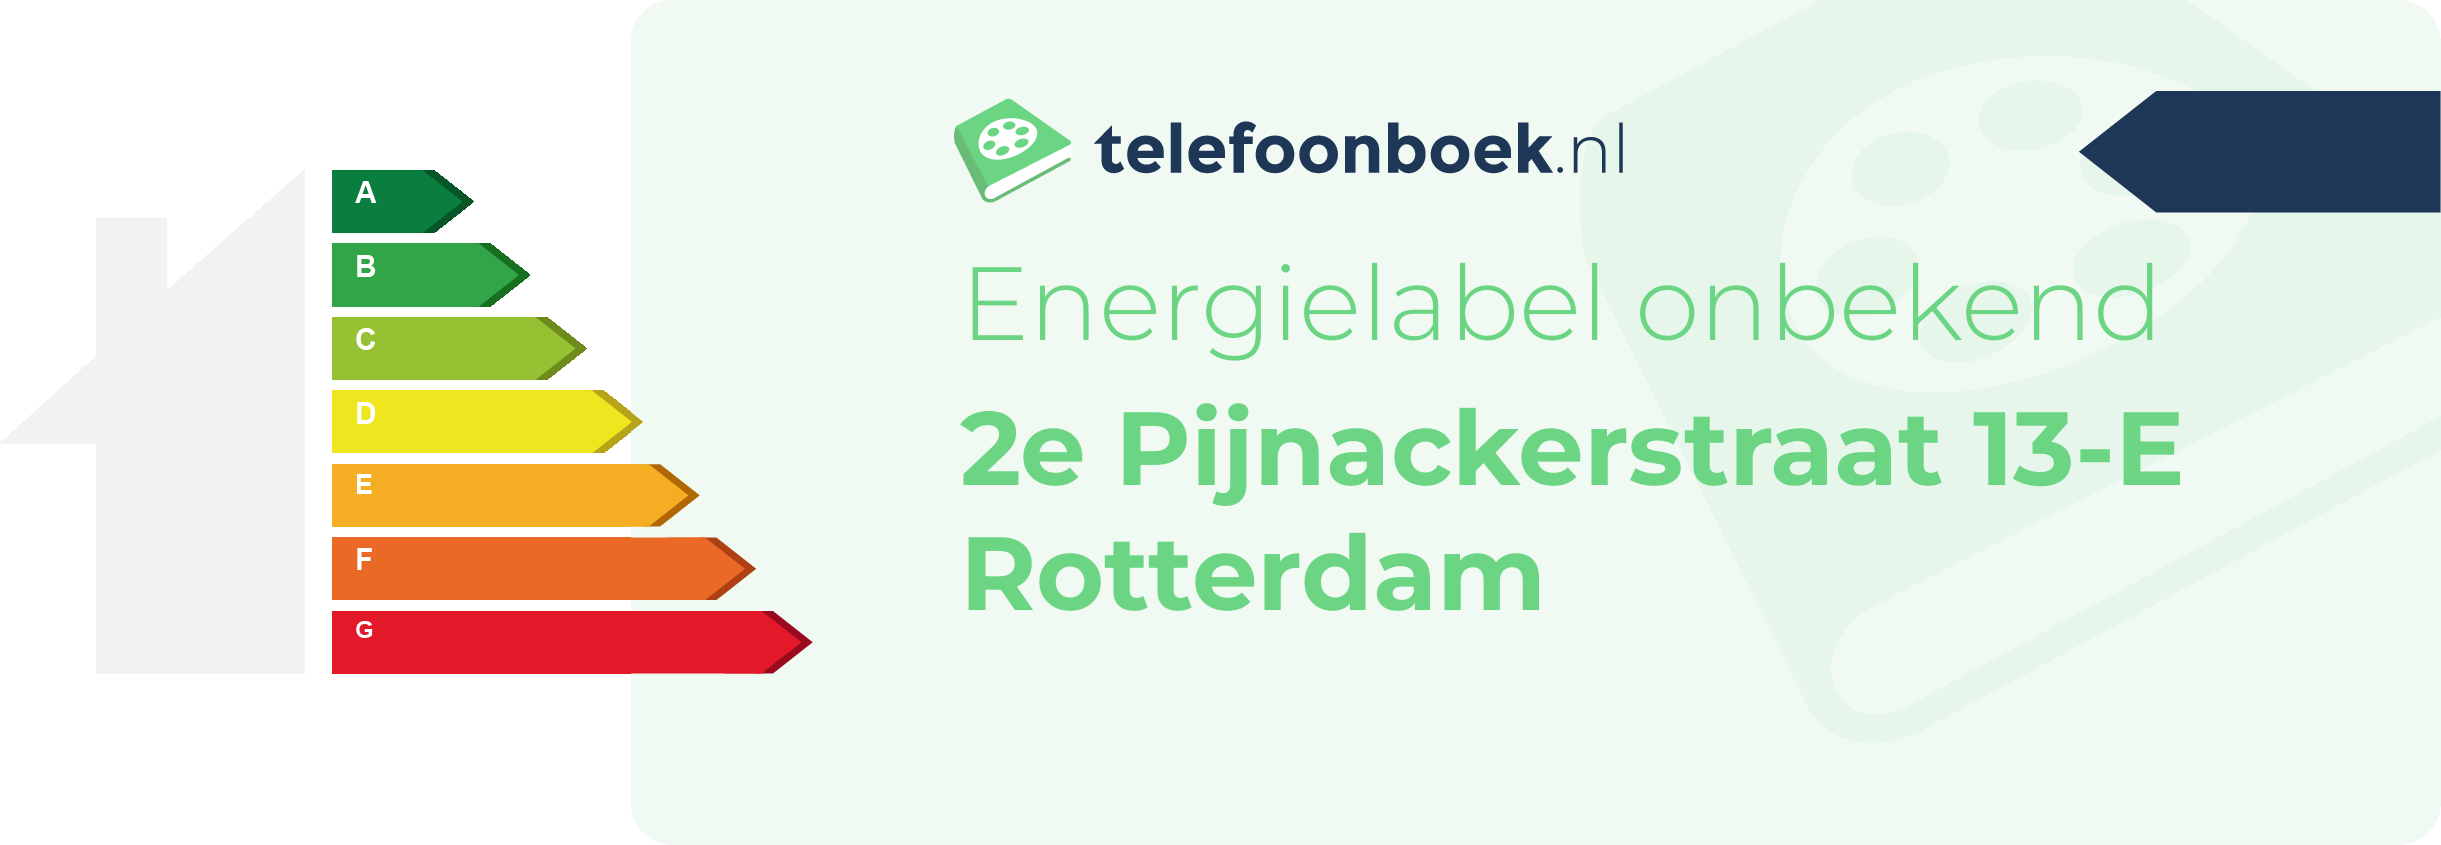 Energielabel 2e Pijnackerstraat 13-E Rotterdam